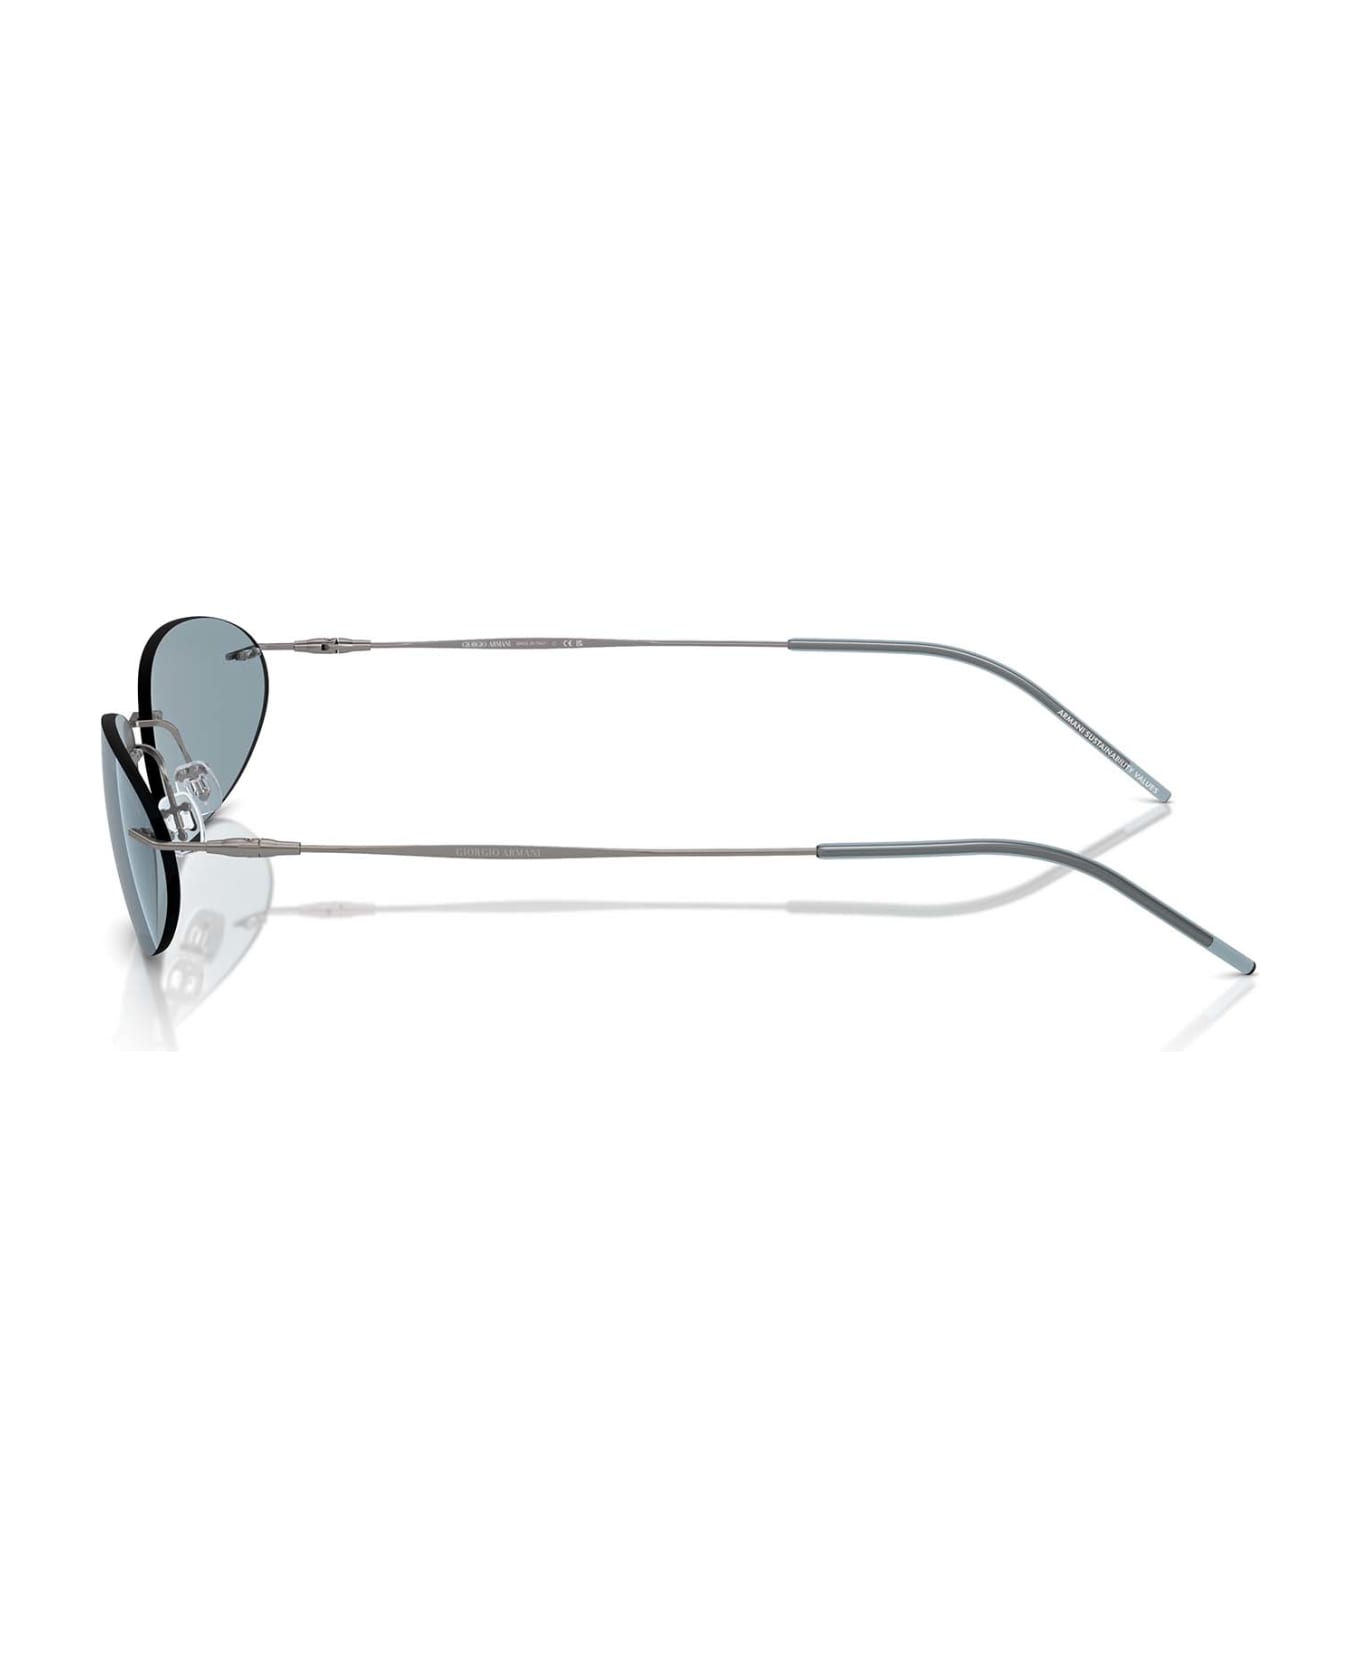 Giorgio Armani Ar1508m Matte Gunmetal Sunglasses - Matte Gunmetal サングラス